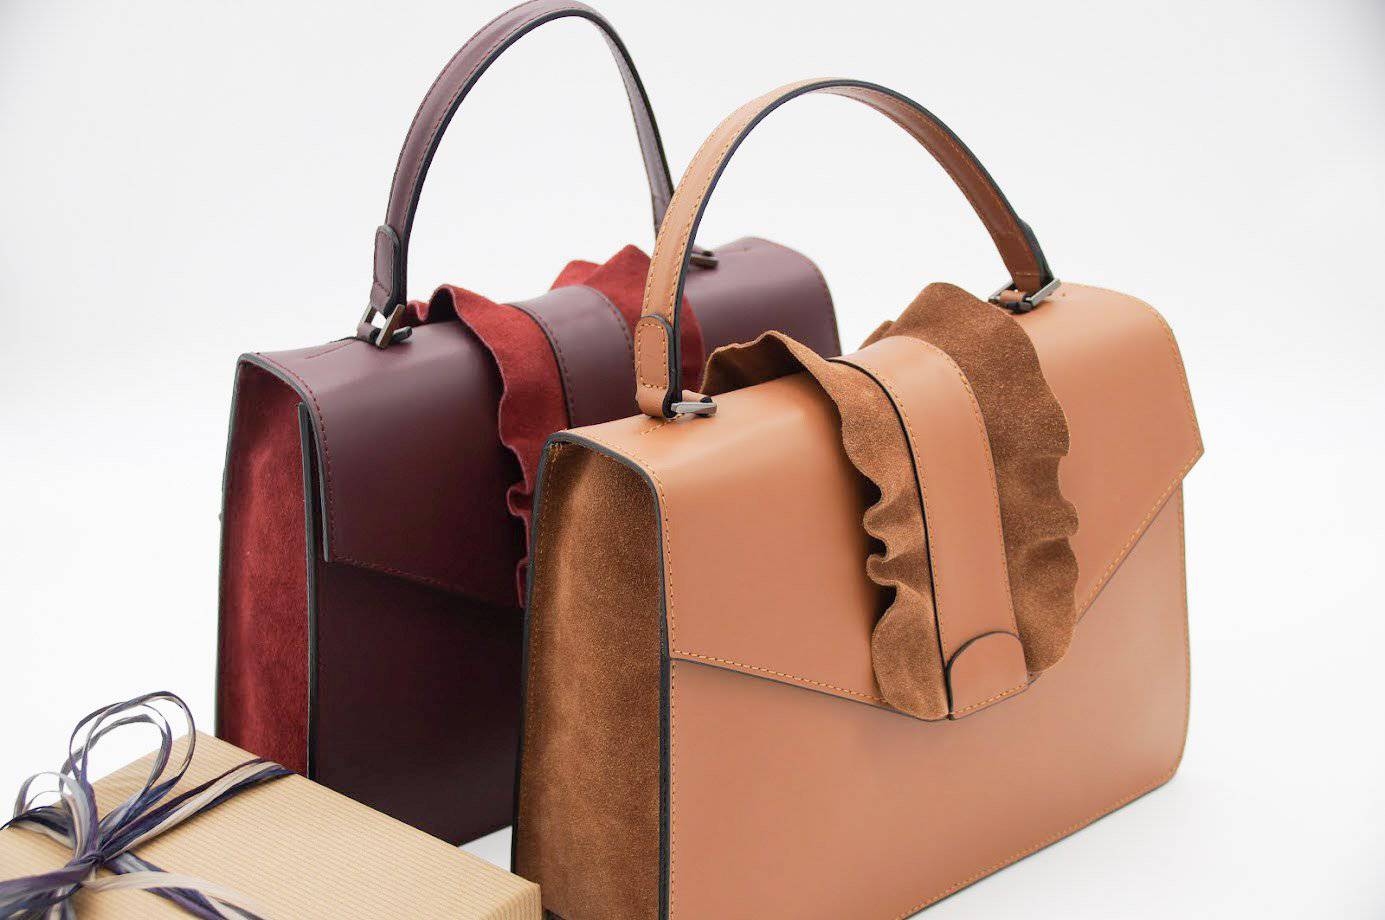 Burgundy Italian Leather Hand Bag - Benzie Gifts